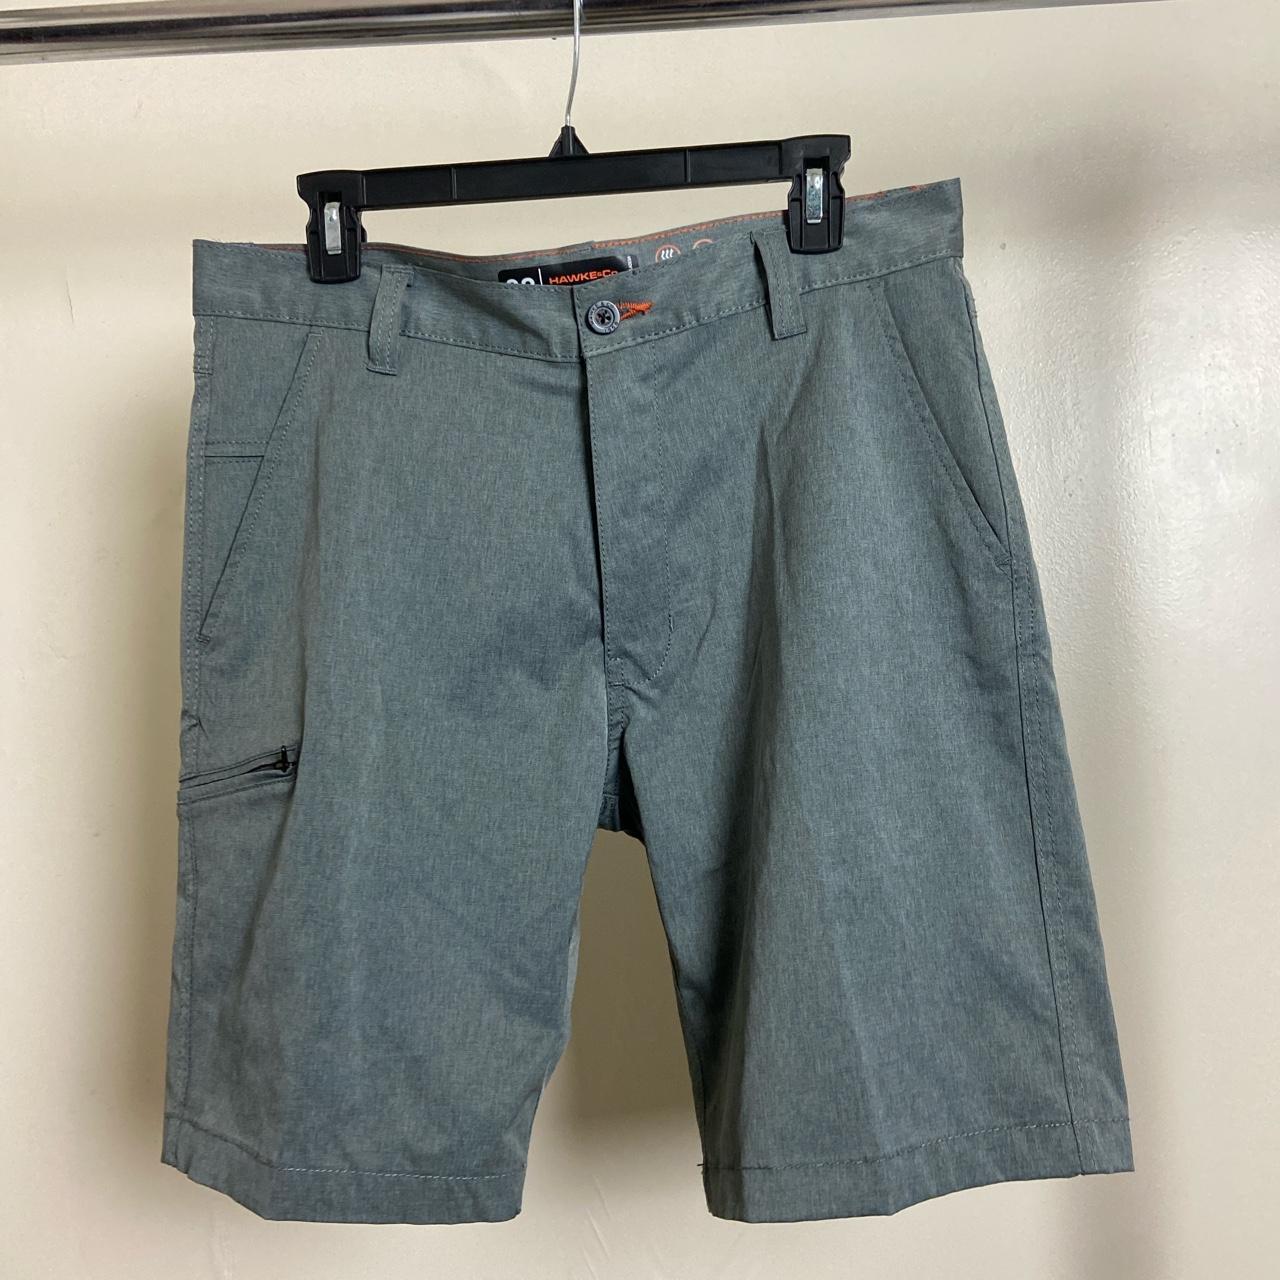 Hawke & Co. Men's Grey Shorts